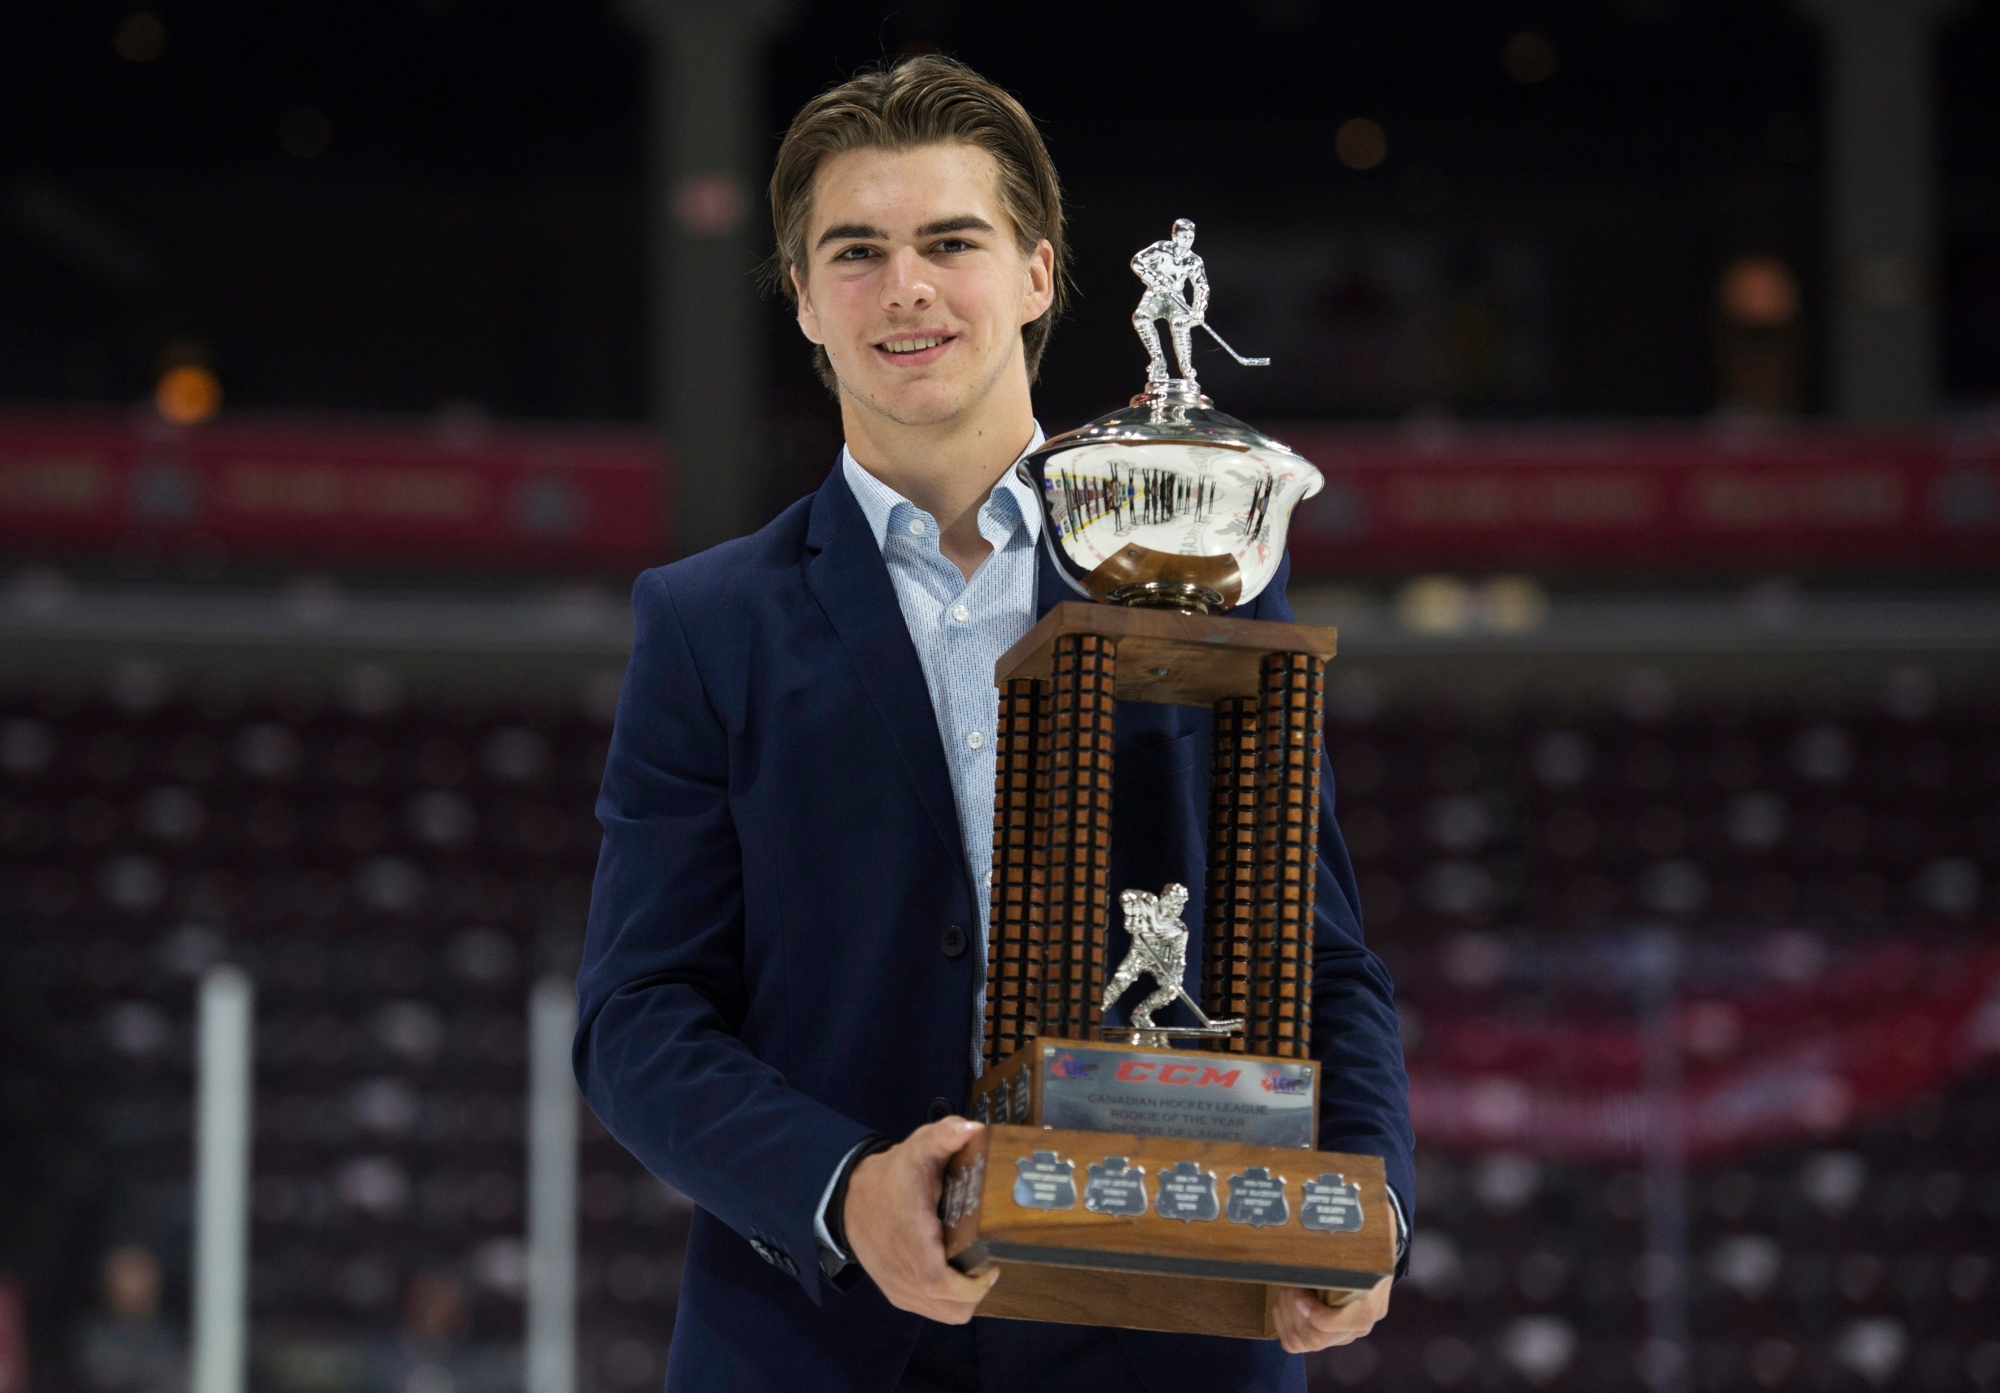 ZUM NHL DRAFT 2017 VOM 23. UND 24. JUNI 2017 IN CHICAGO, USA, STELLEN WIR IHNEN FOLGENDES BILDMATERIAL ZU NICO HISCHIER ZUR VERFUEGUNG - CHL Rookie of the Year Award recipient Nico Hischier, from the Halifax Mooseheads, holds his trophy following a media availability at the Memorial Cup Saturday, May 27, 2017, in Windsor, Ontario. (KEYSTONE/Adrian Wyld/The Canadian Press via AP) EISHOCKEY NHL DRAFT NICO HISCHIER